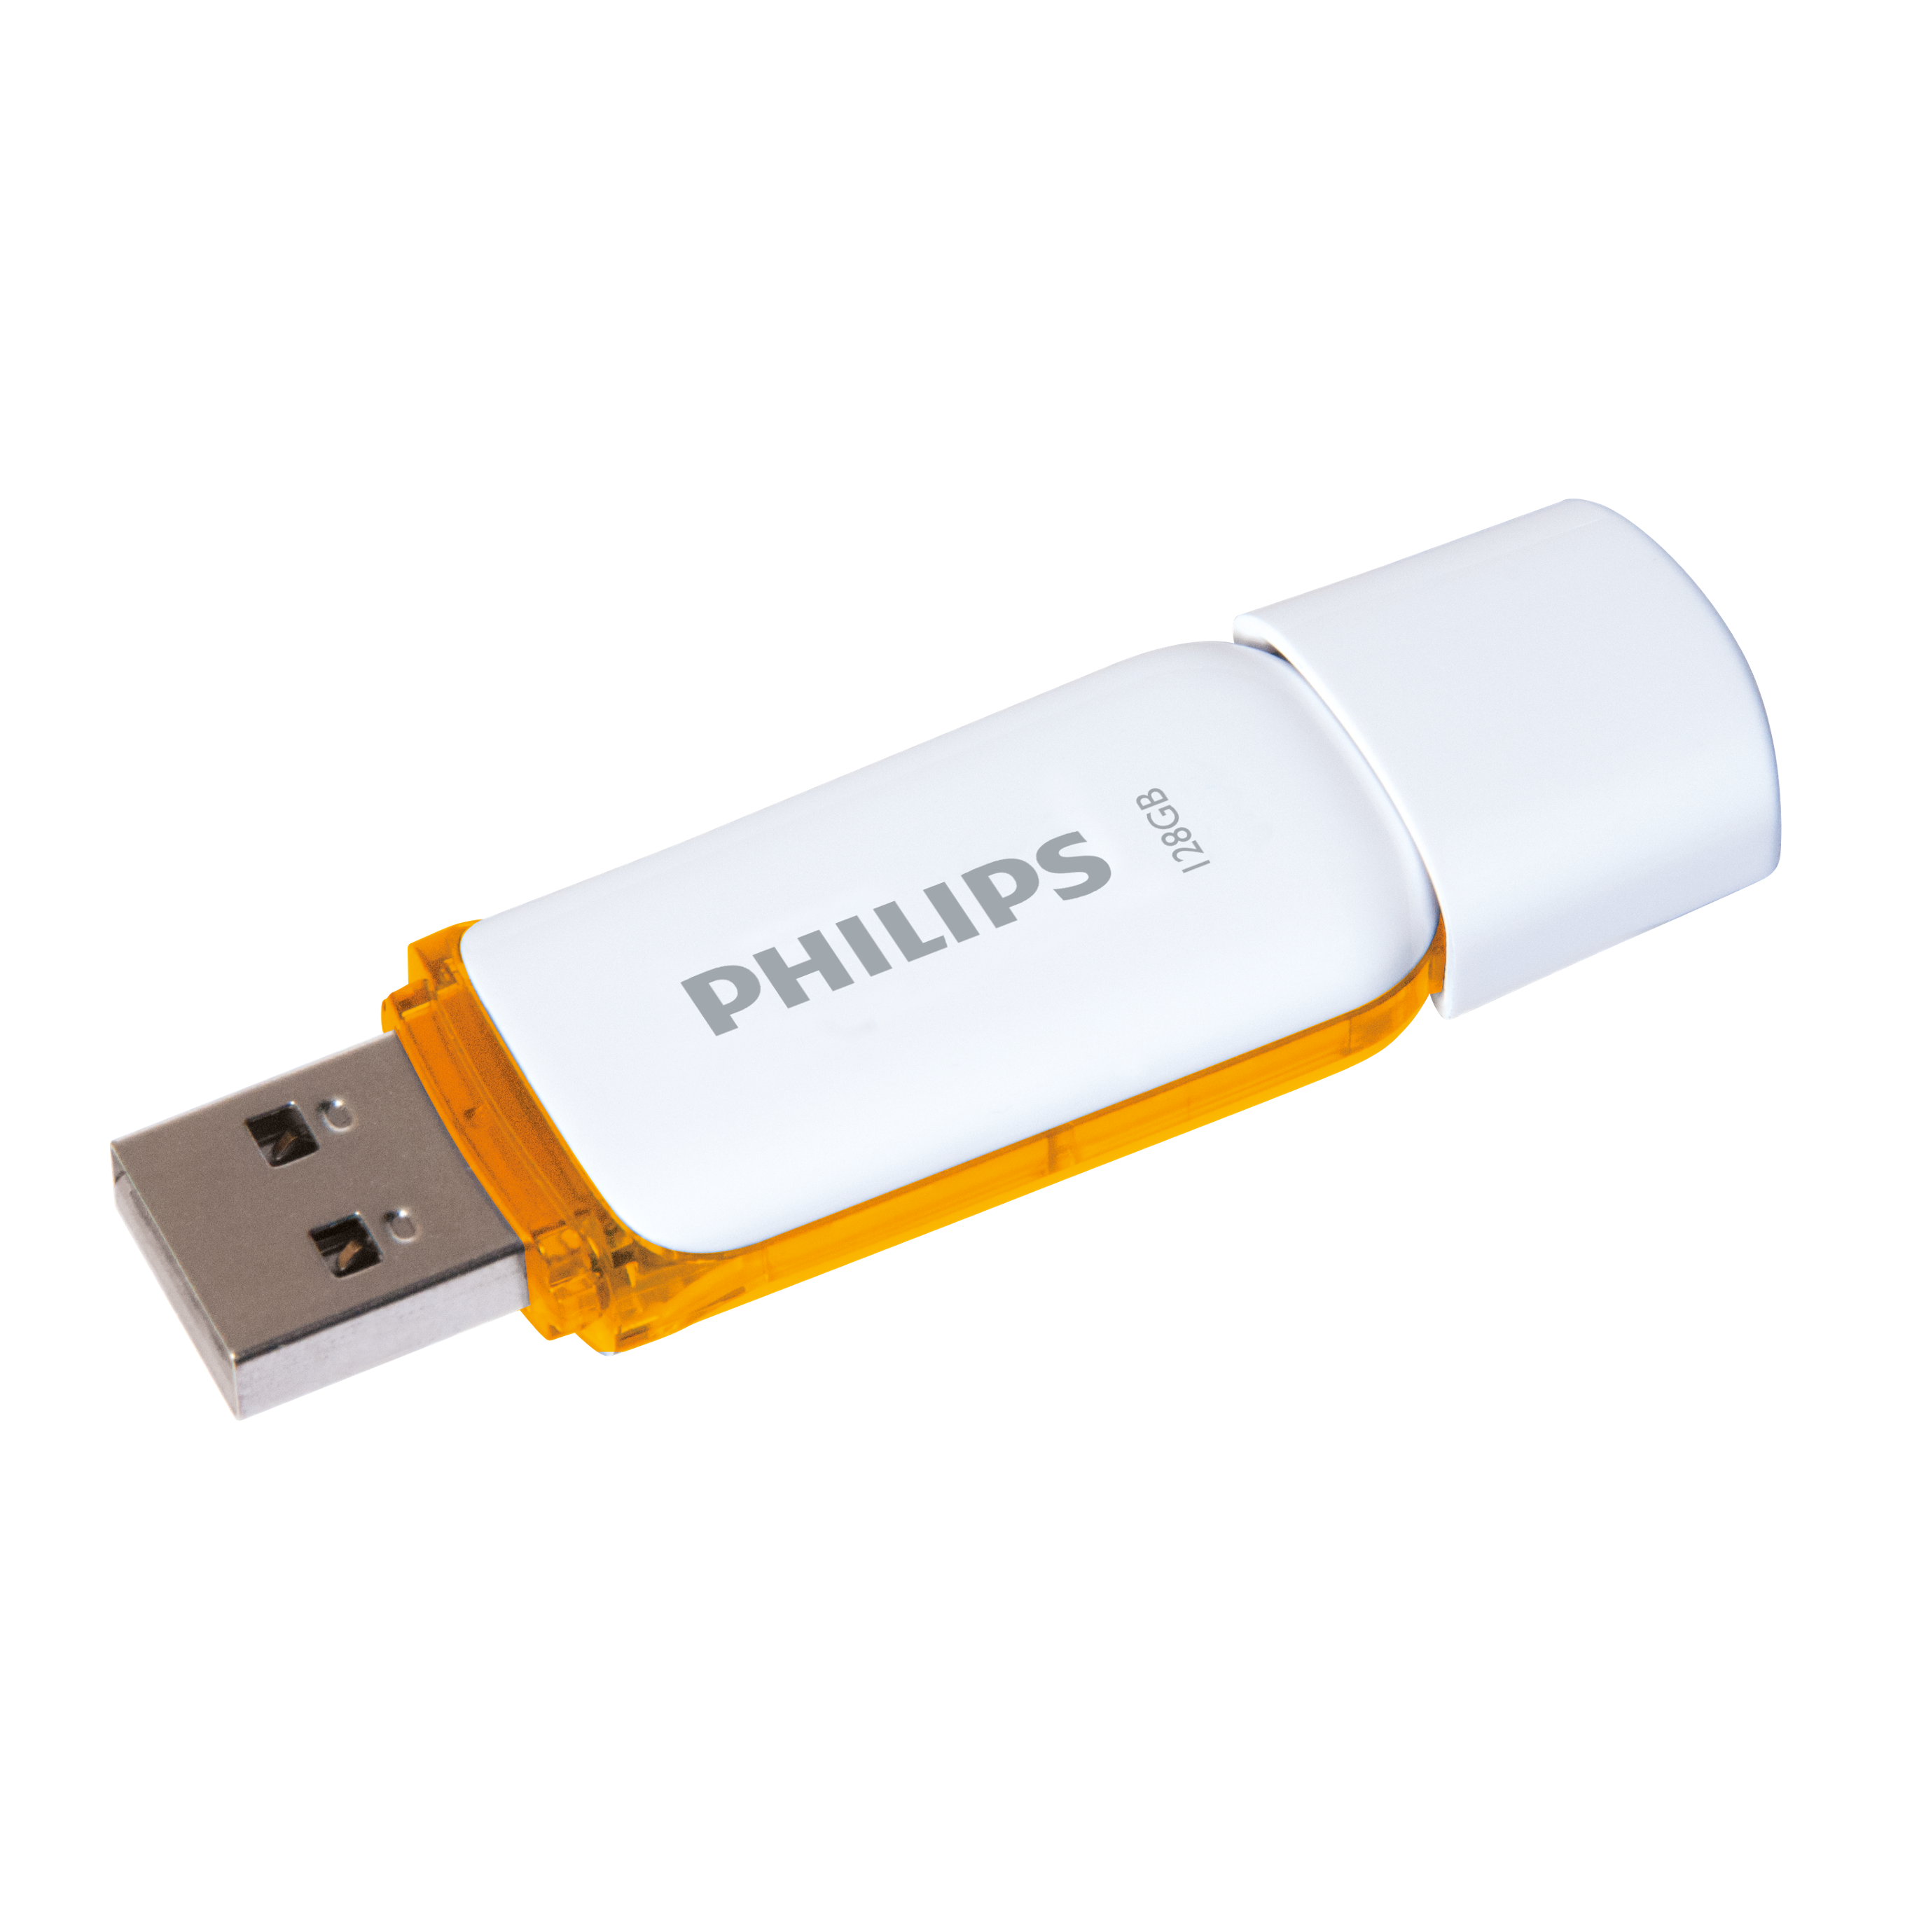 128 25 PHILIPS GB) Snow Edition (Weiß, MB/s Orange®, Sunrise USB-Stick